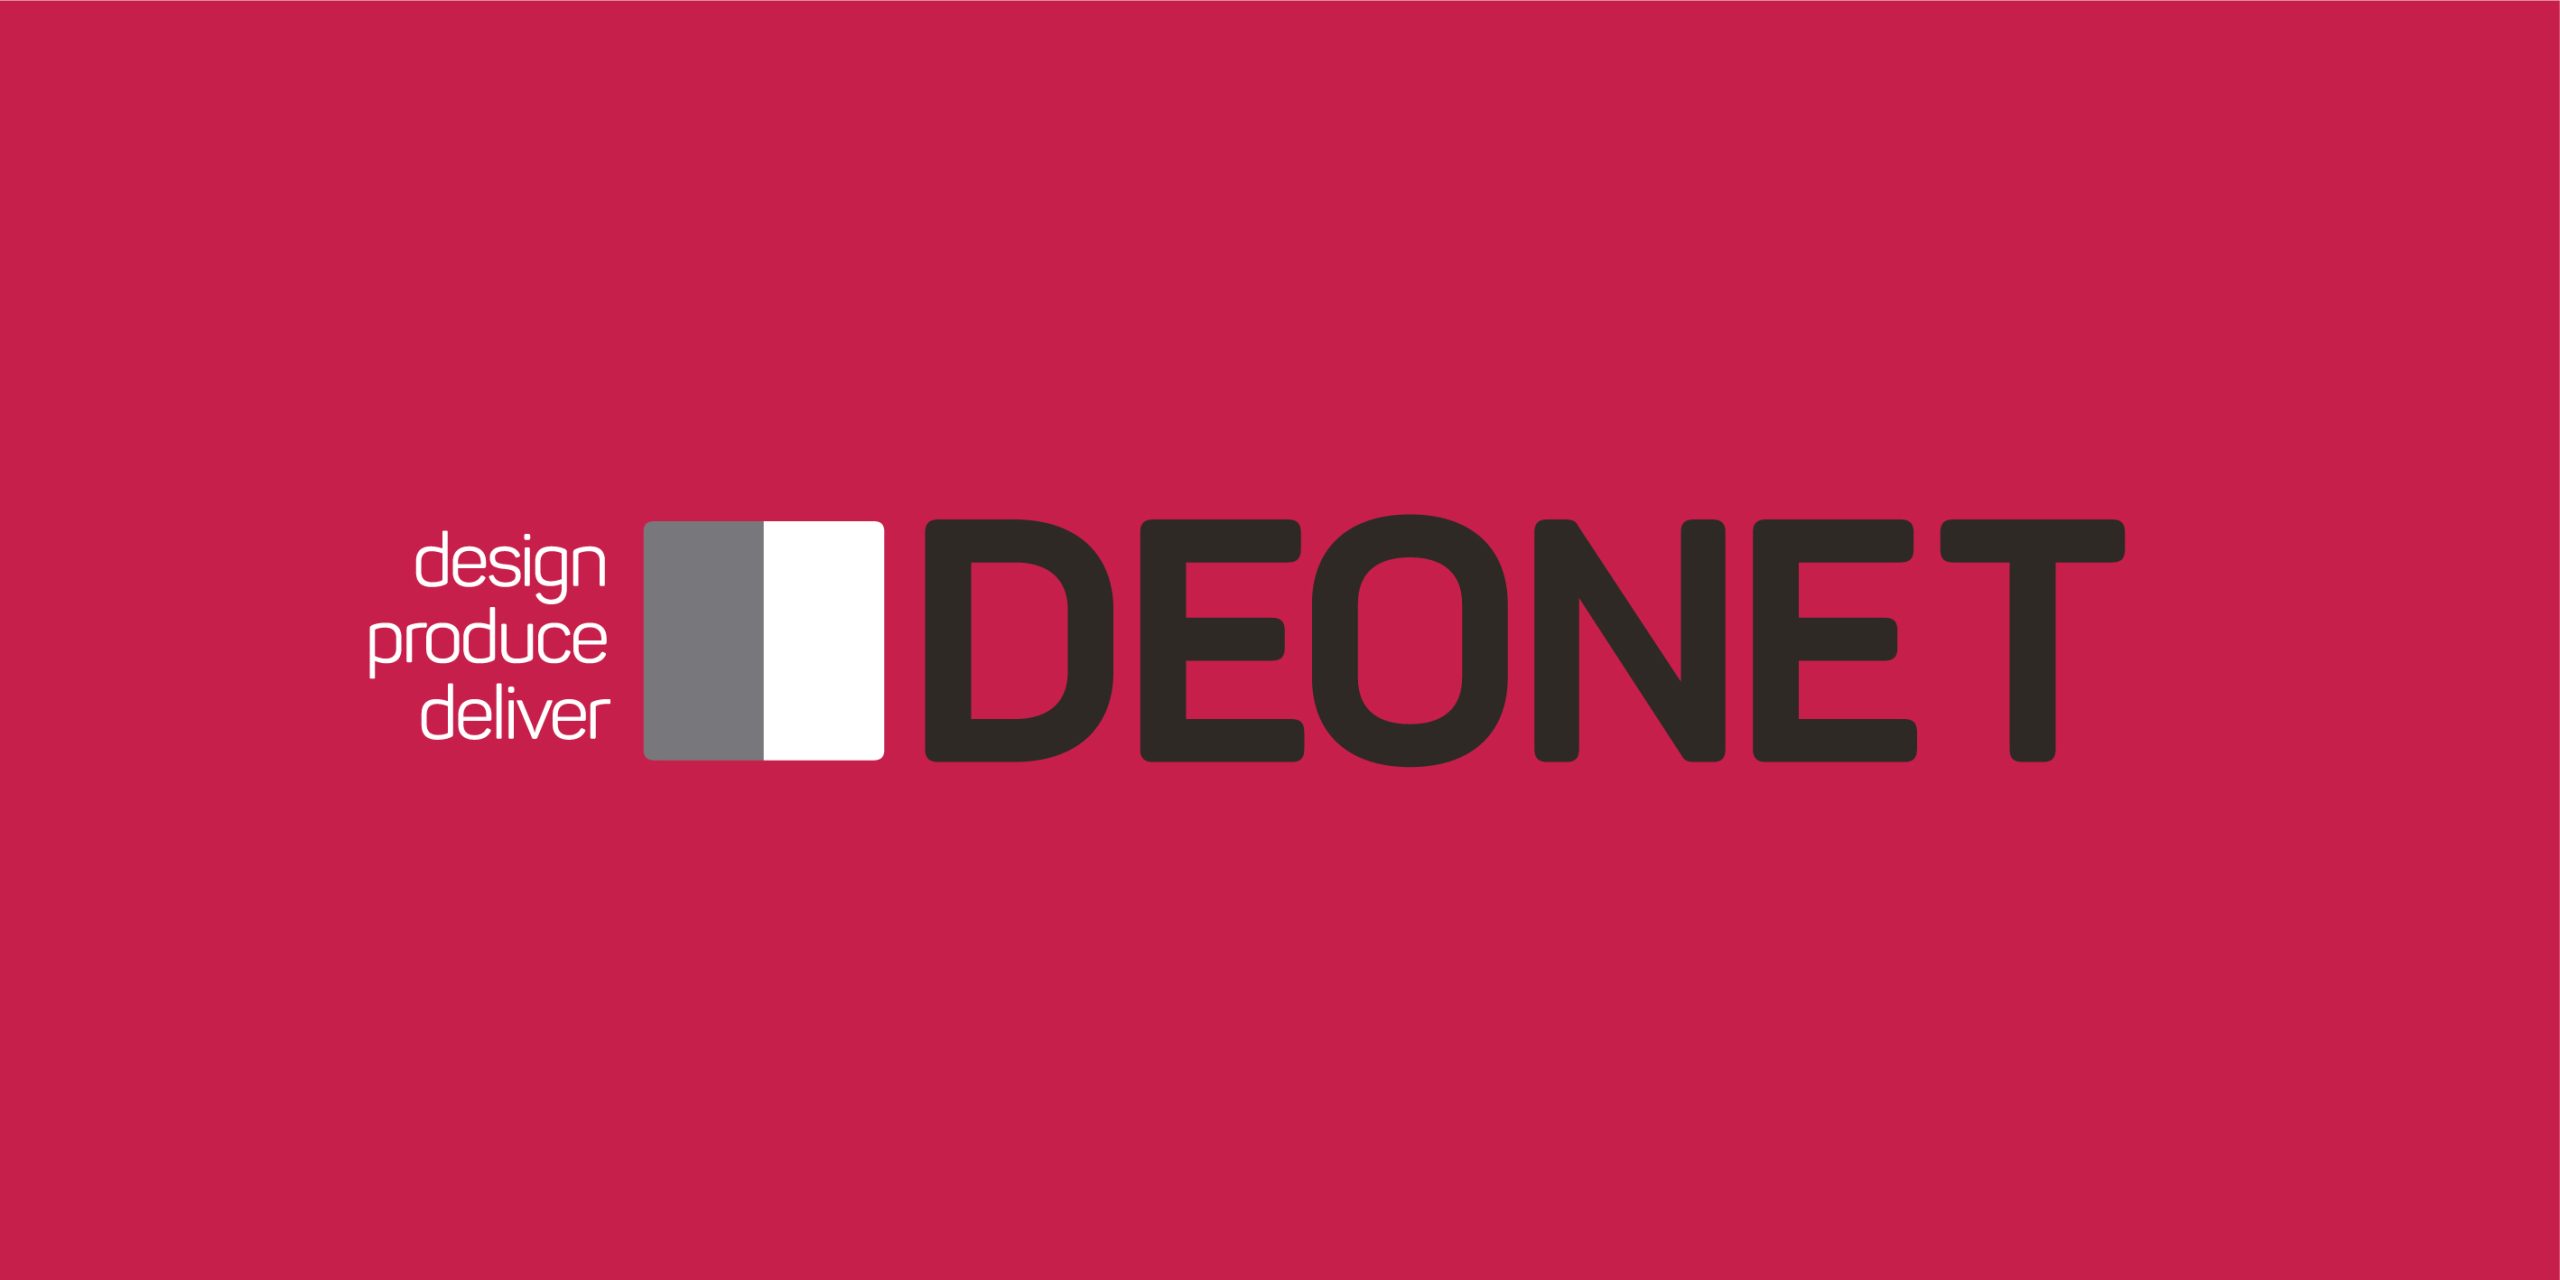 deonet logo arka renkli scaled